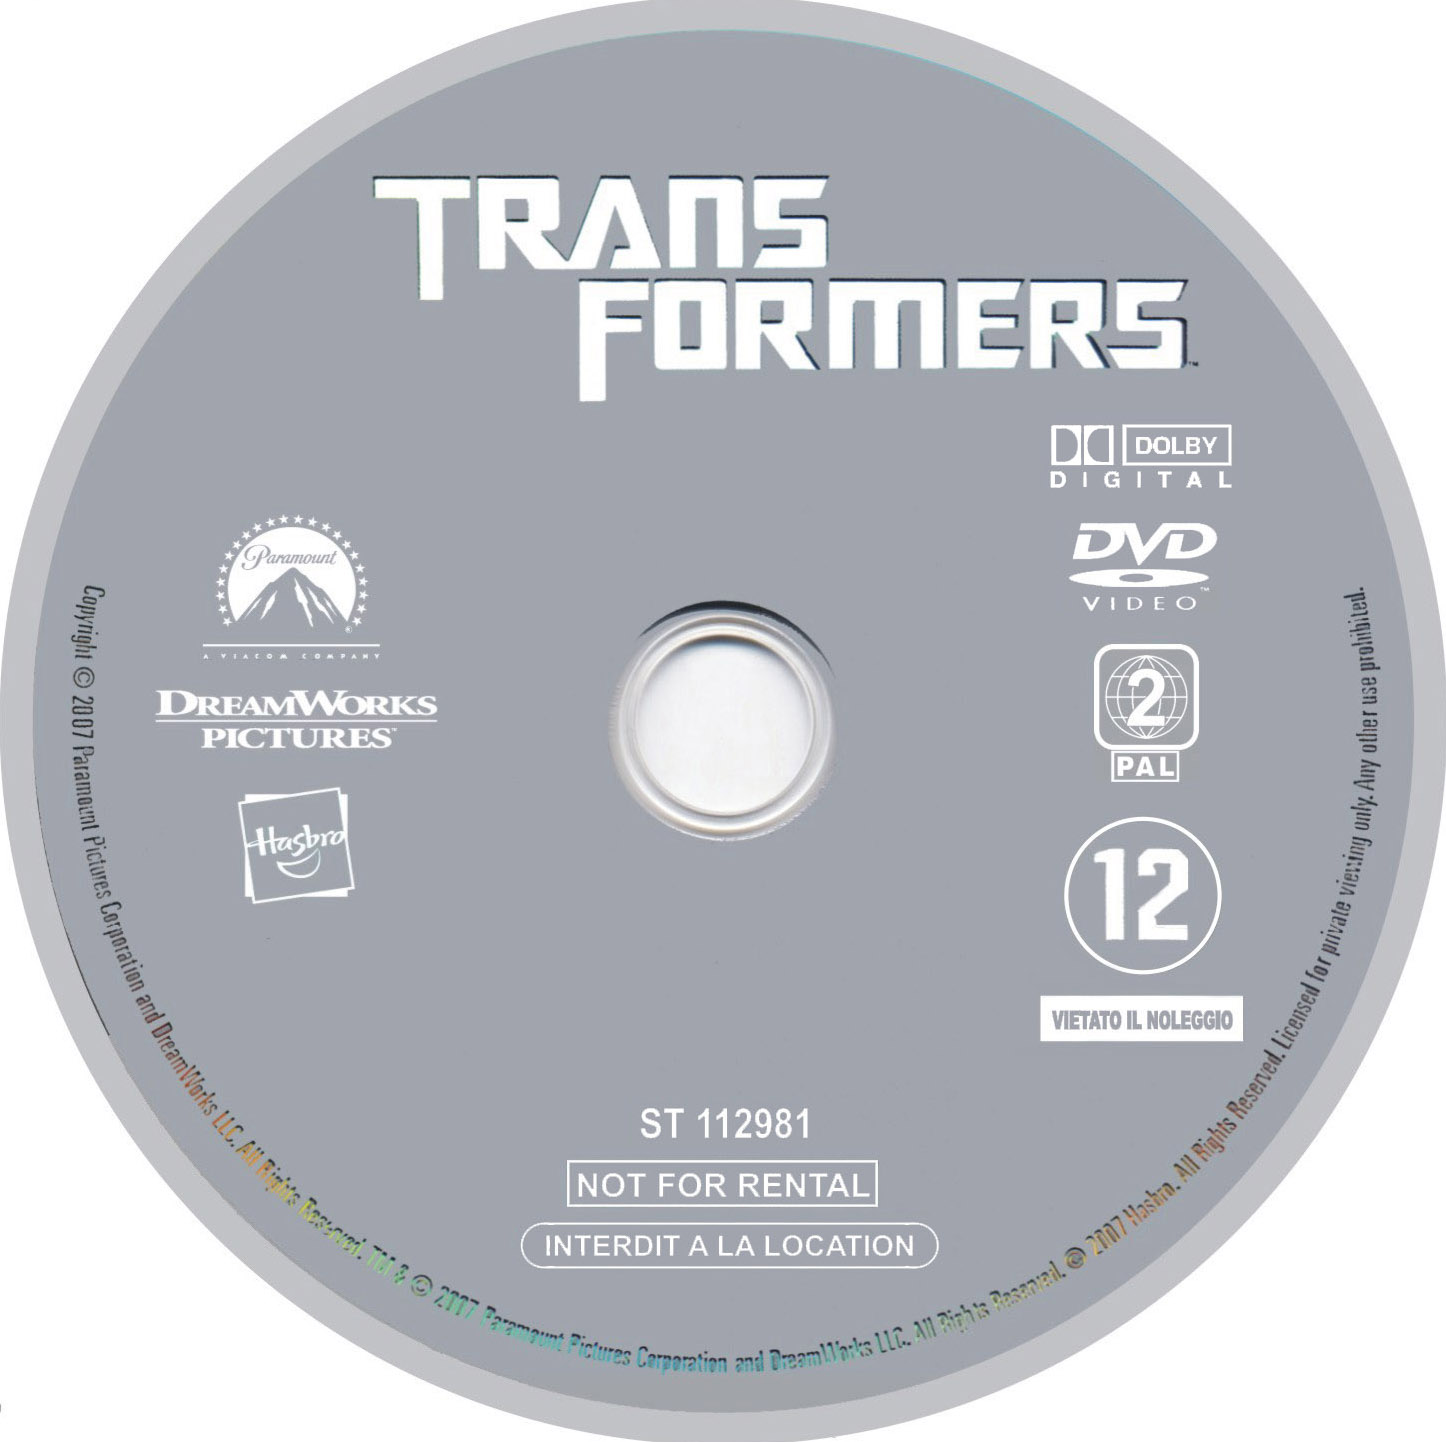 Transformers DISC 1